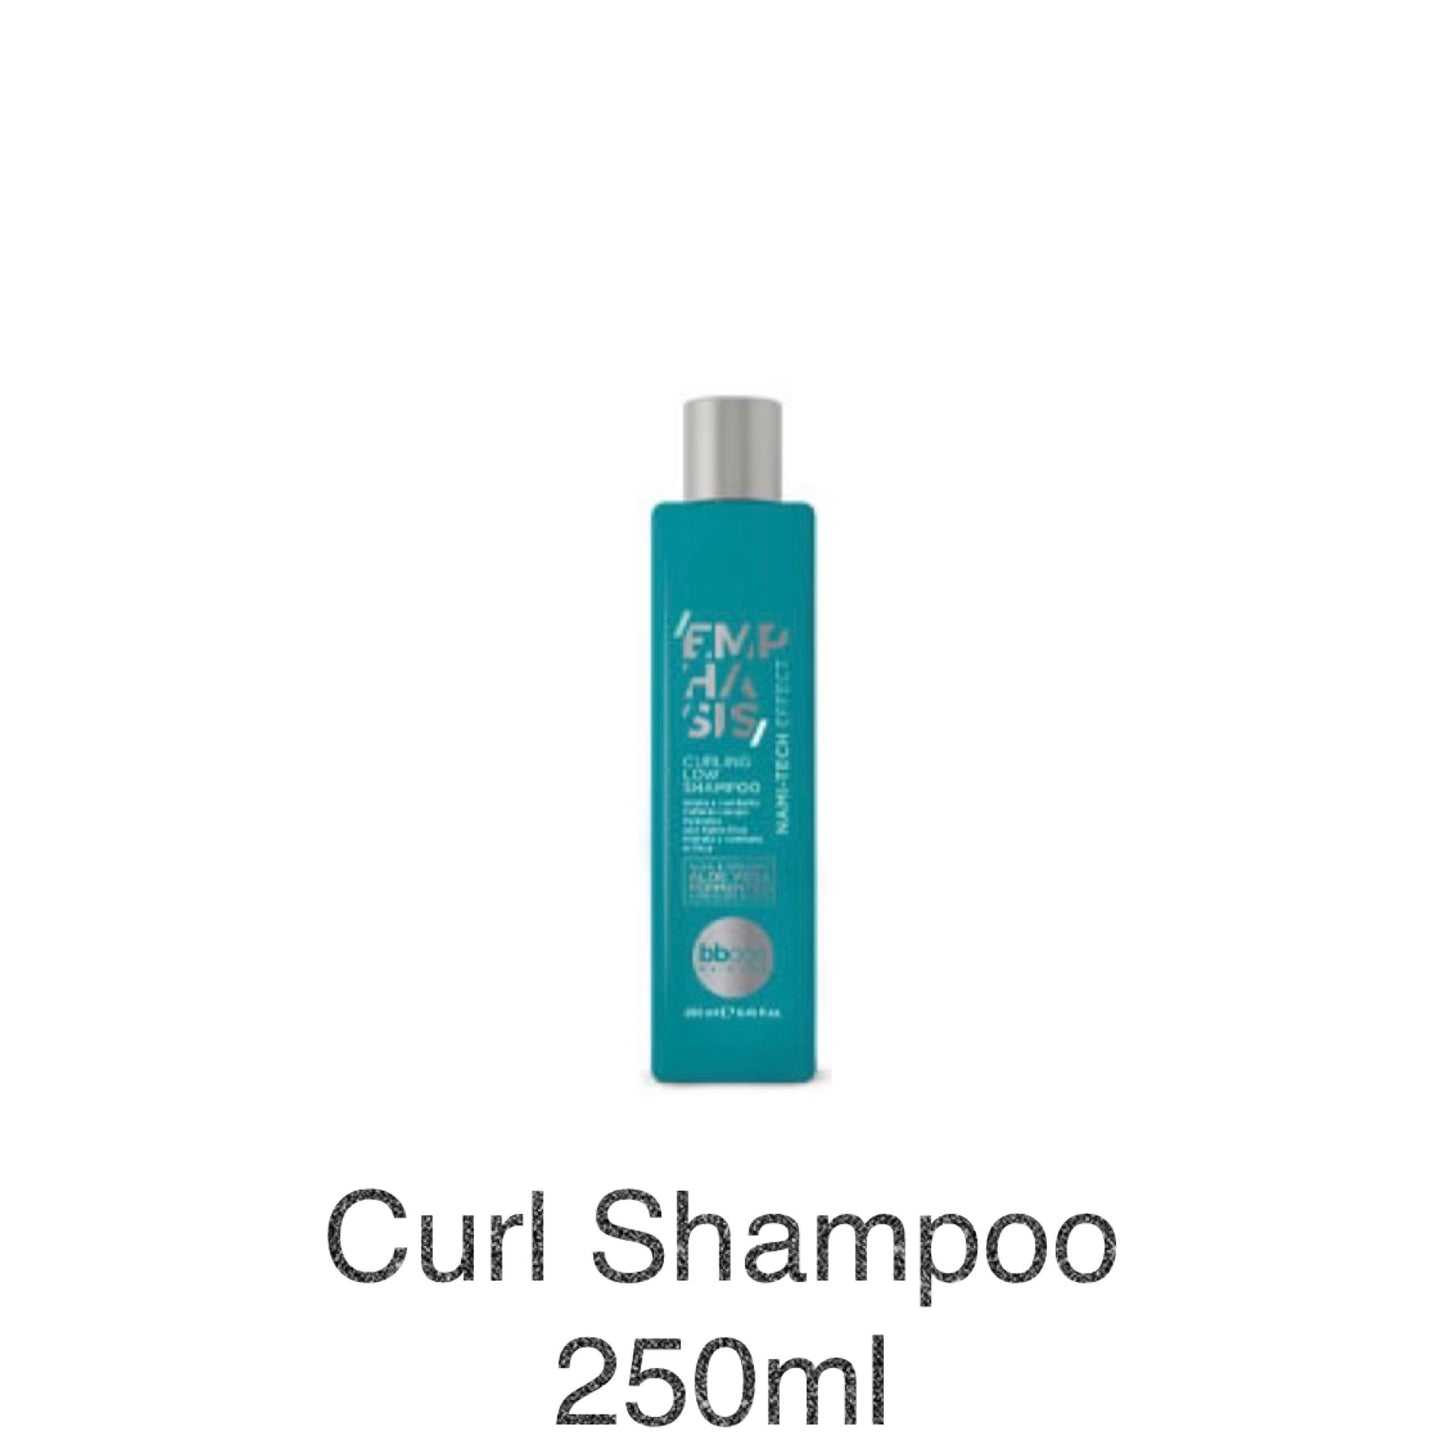 MHP- Italian Emphasis Low Curl Shampoo